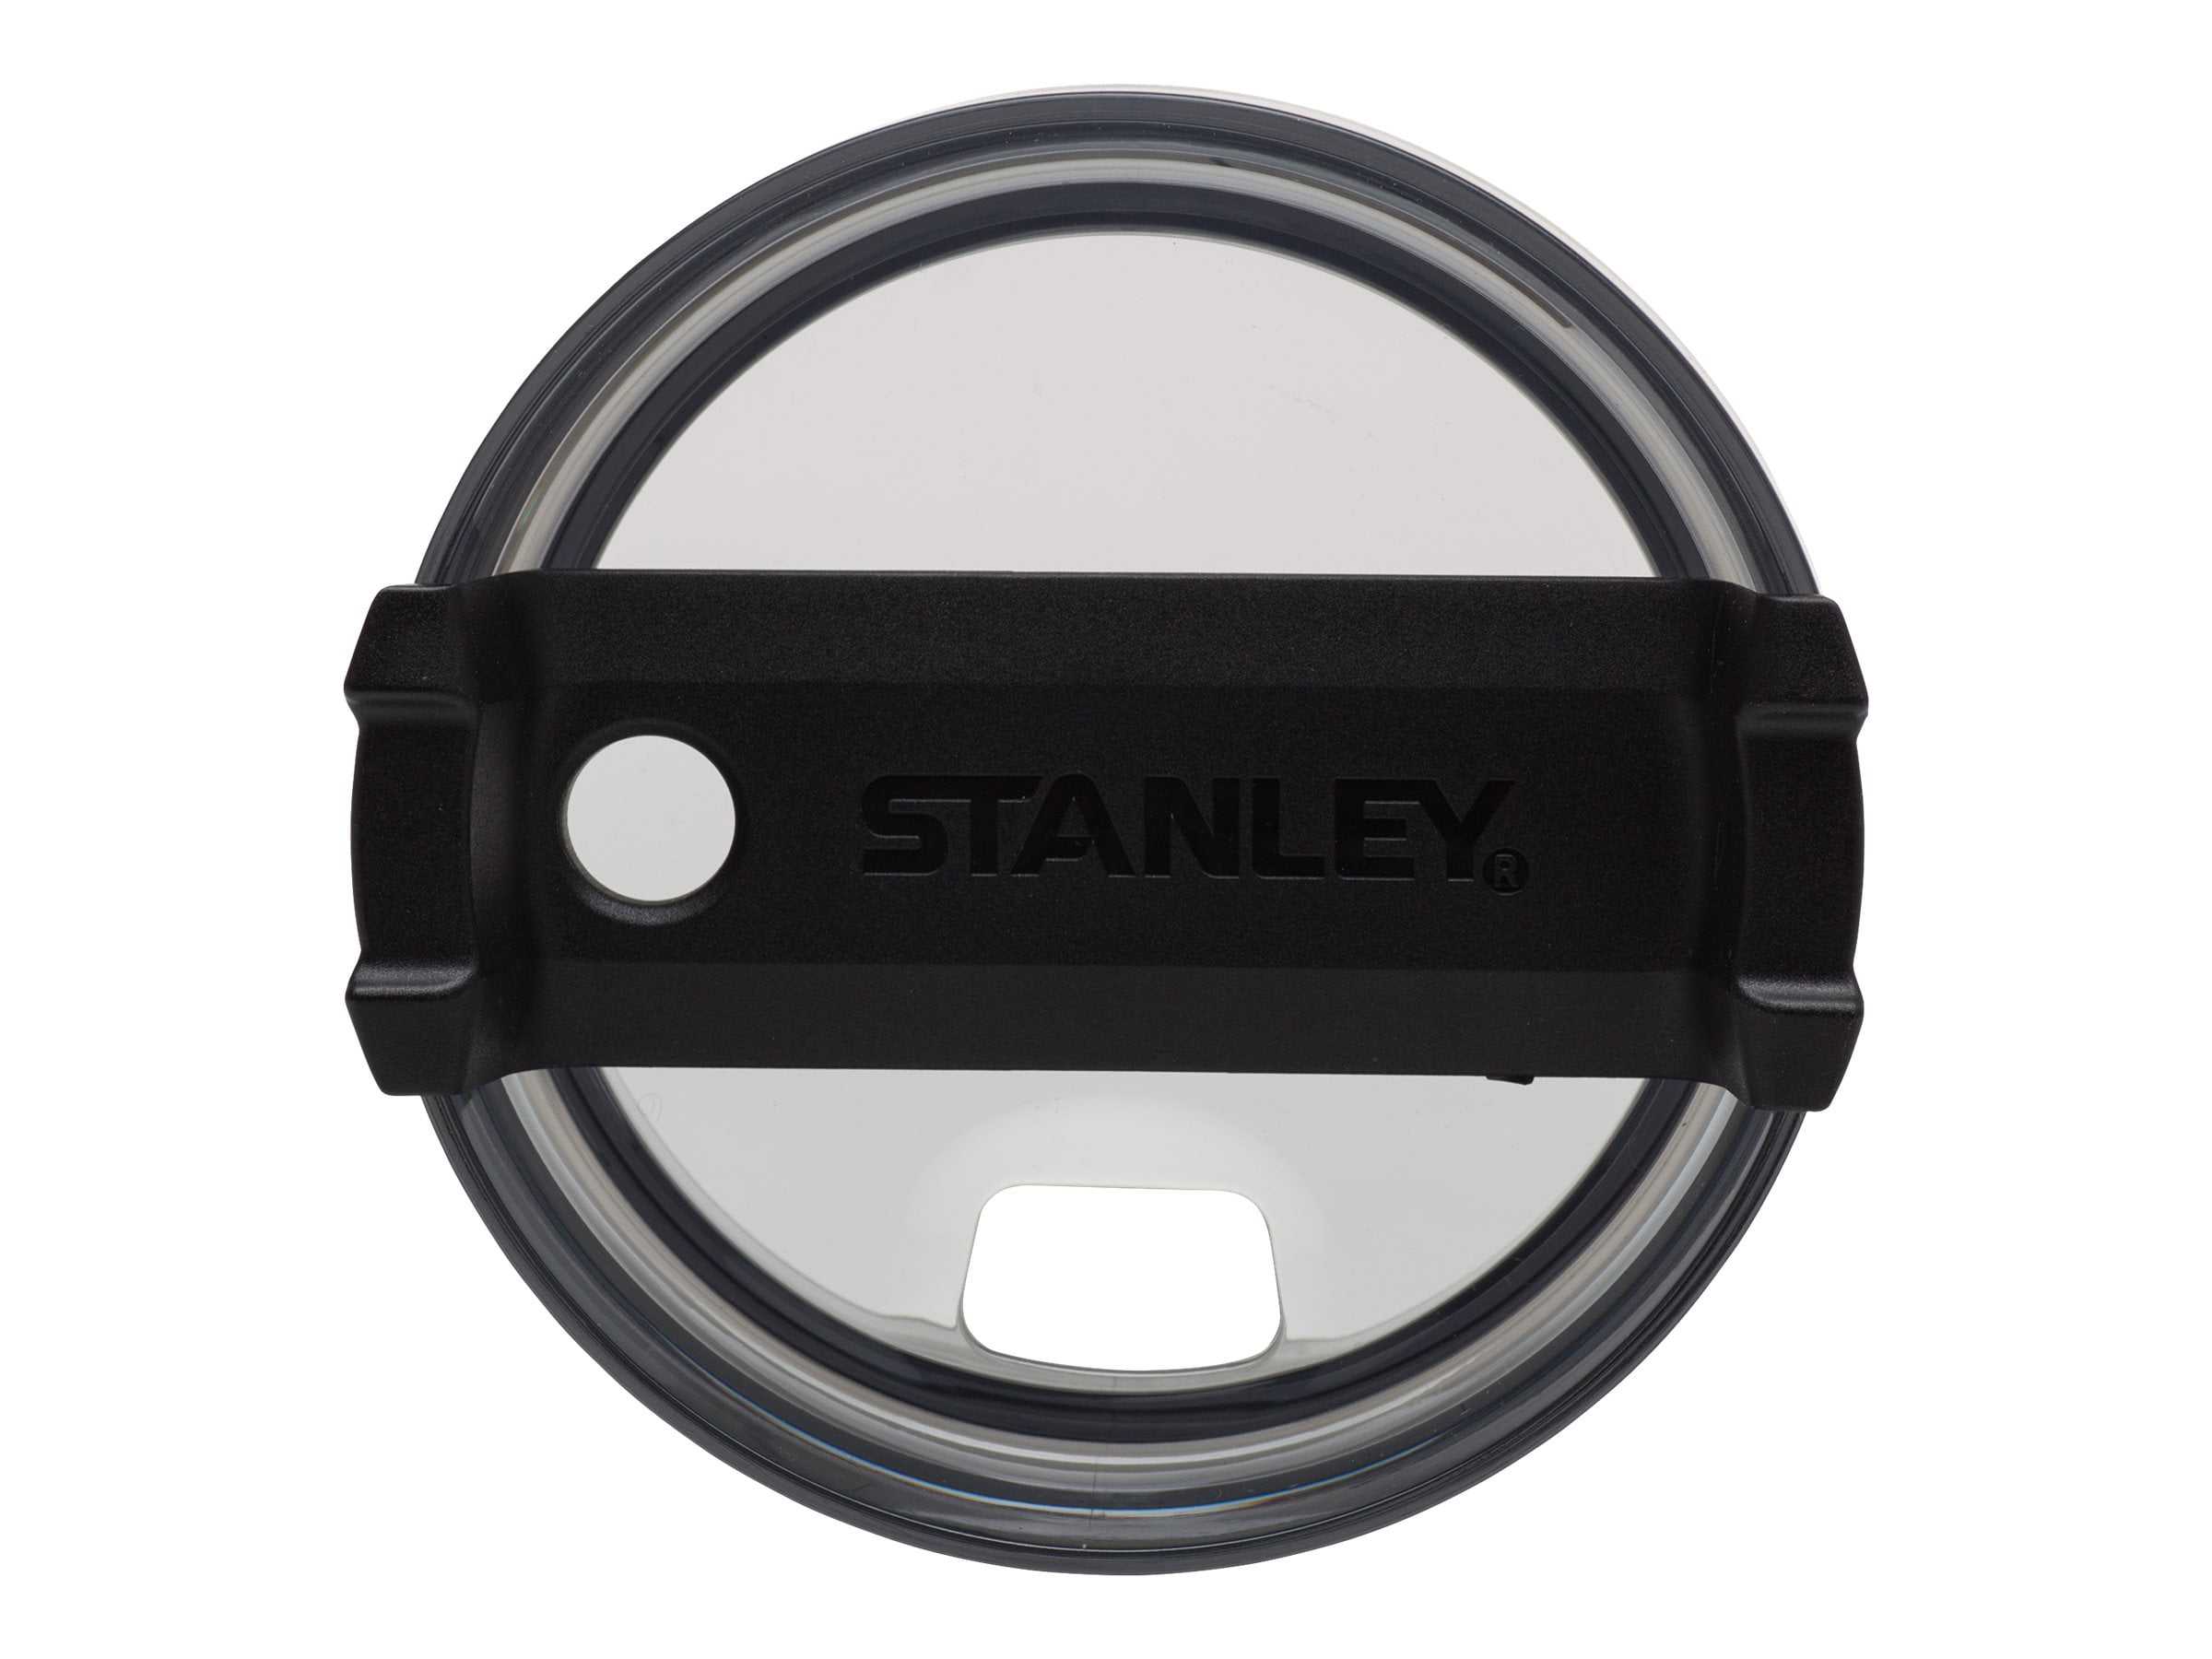 Stanley Adventure Reusable Vacuum Insulated Quencher Tumbler 20 oz - Matte  Black 